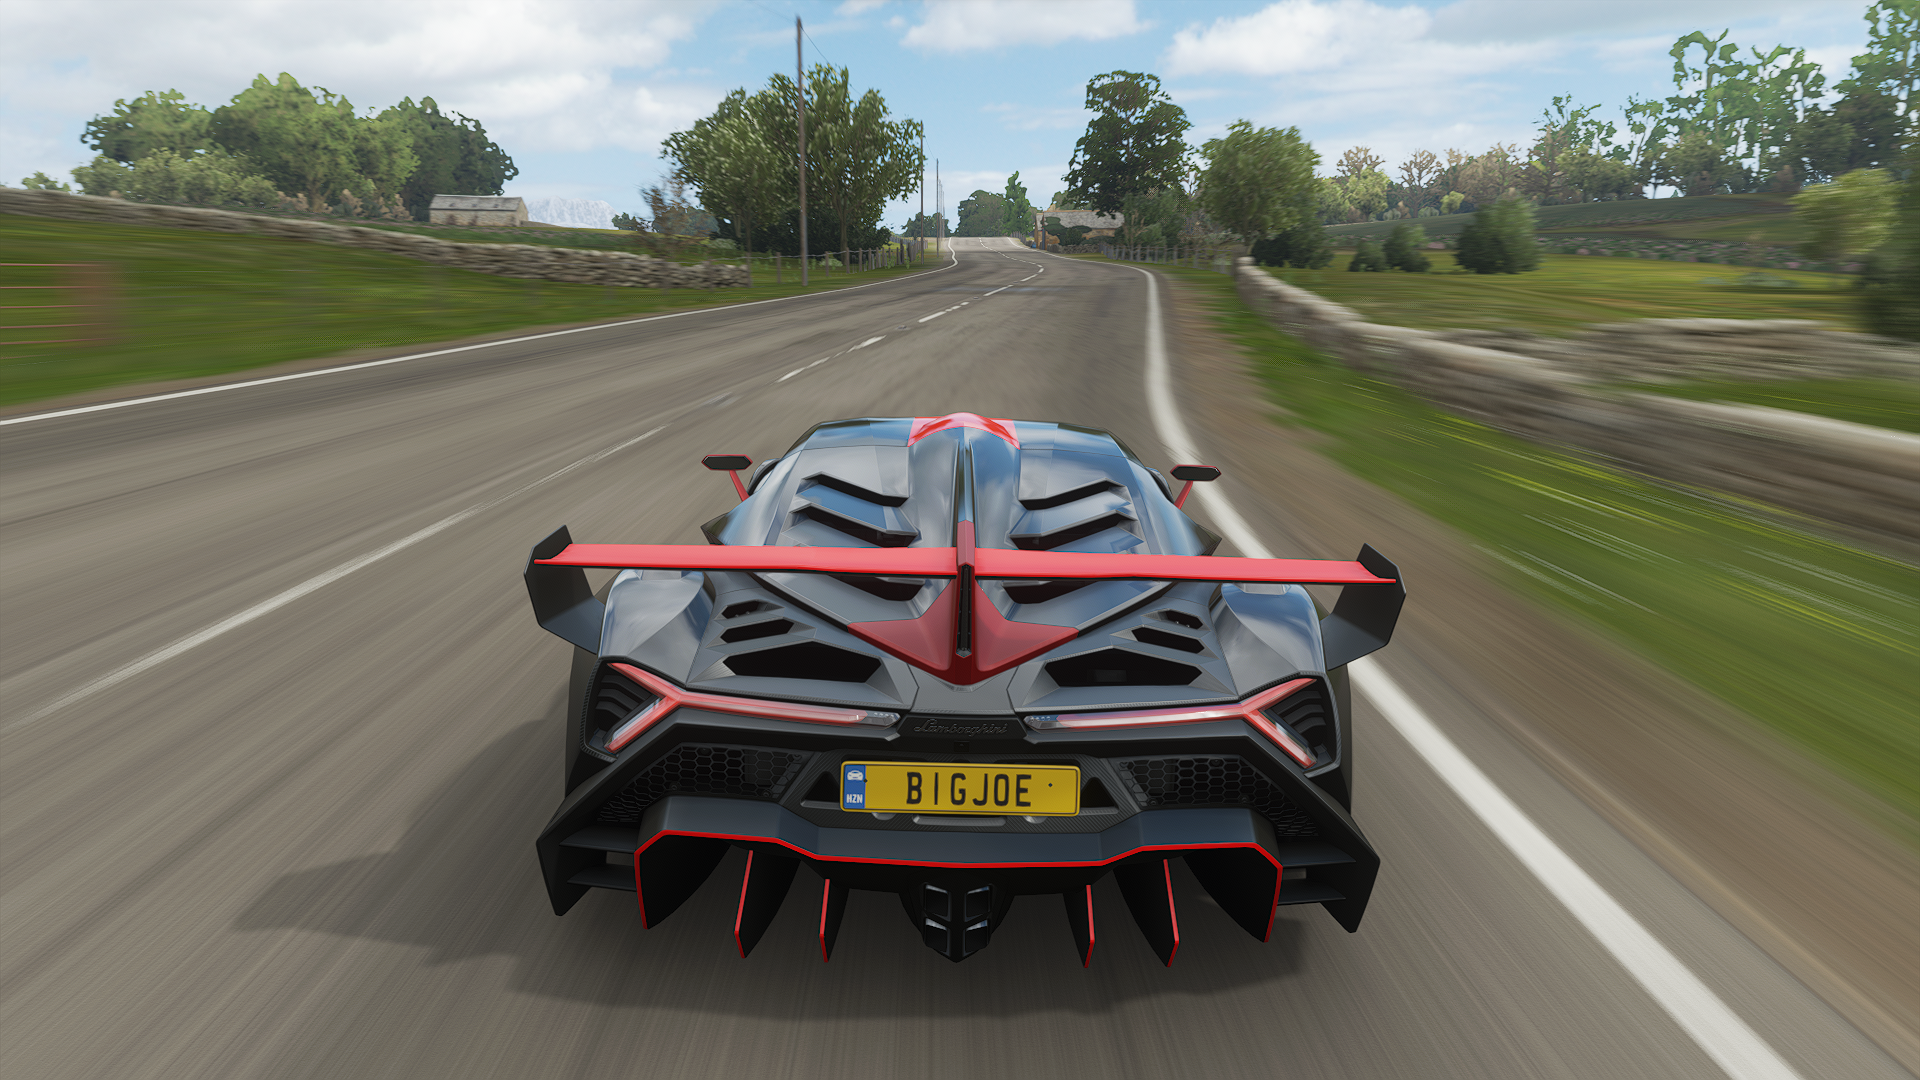 Car Forza Forza Horizon Forza Horizon 4 Racing Video Games Taillights Rear View Licence Plates Road  1920x1080